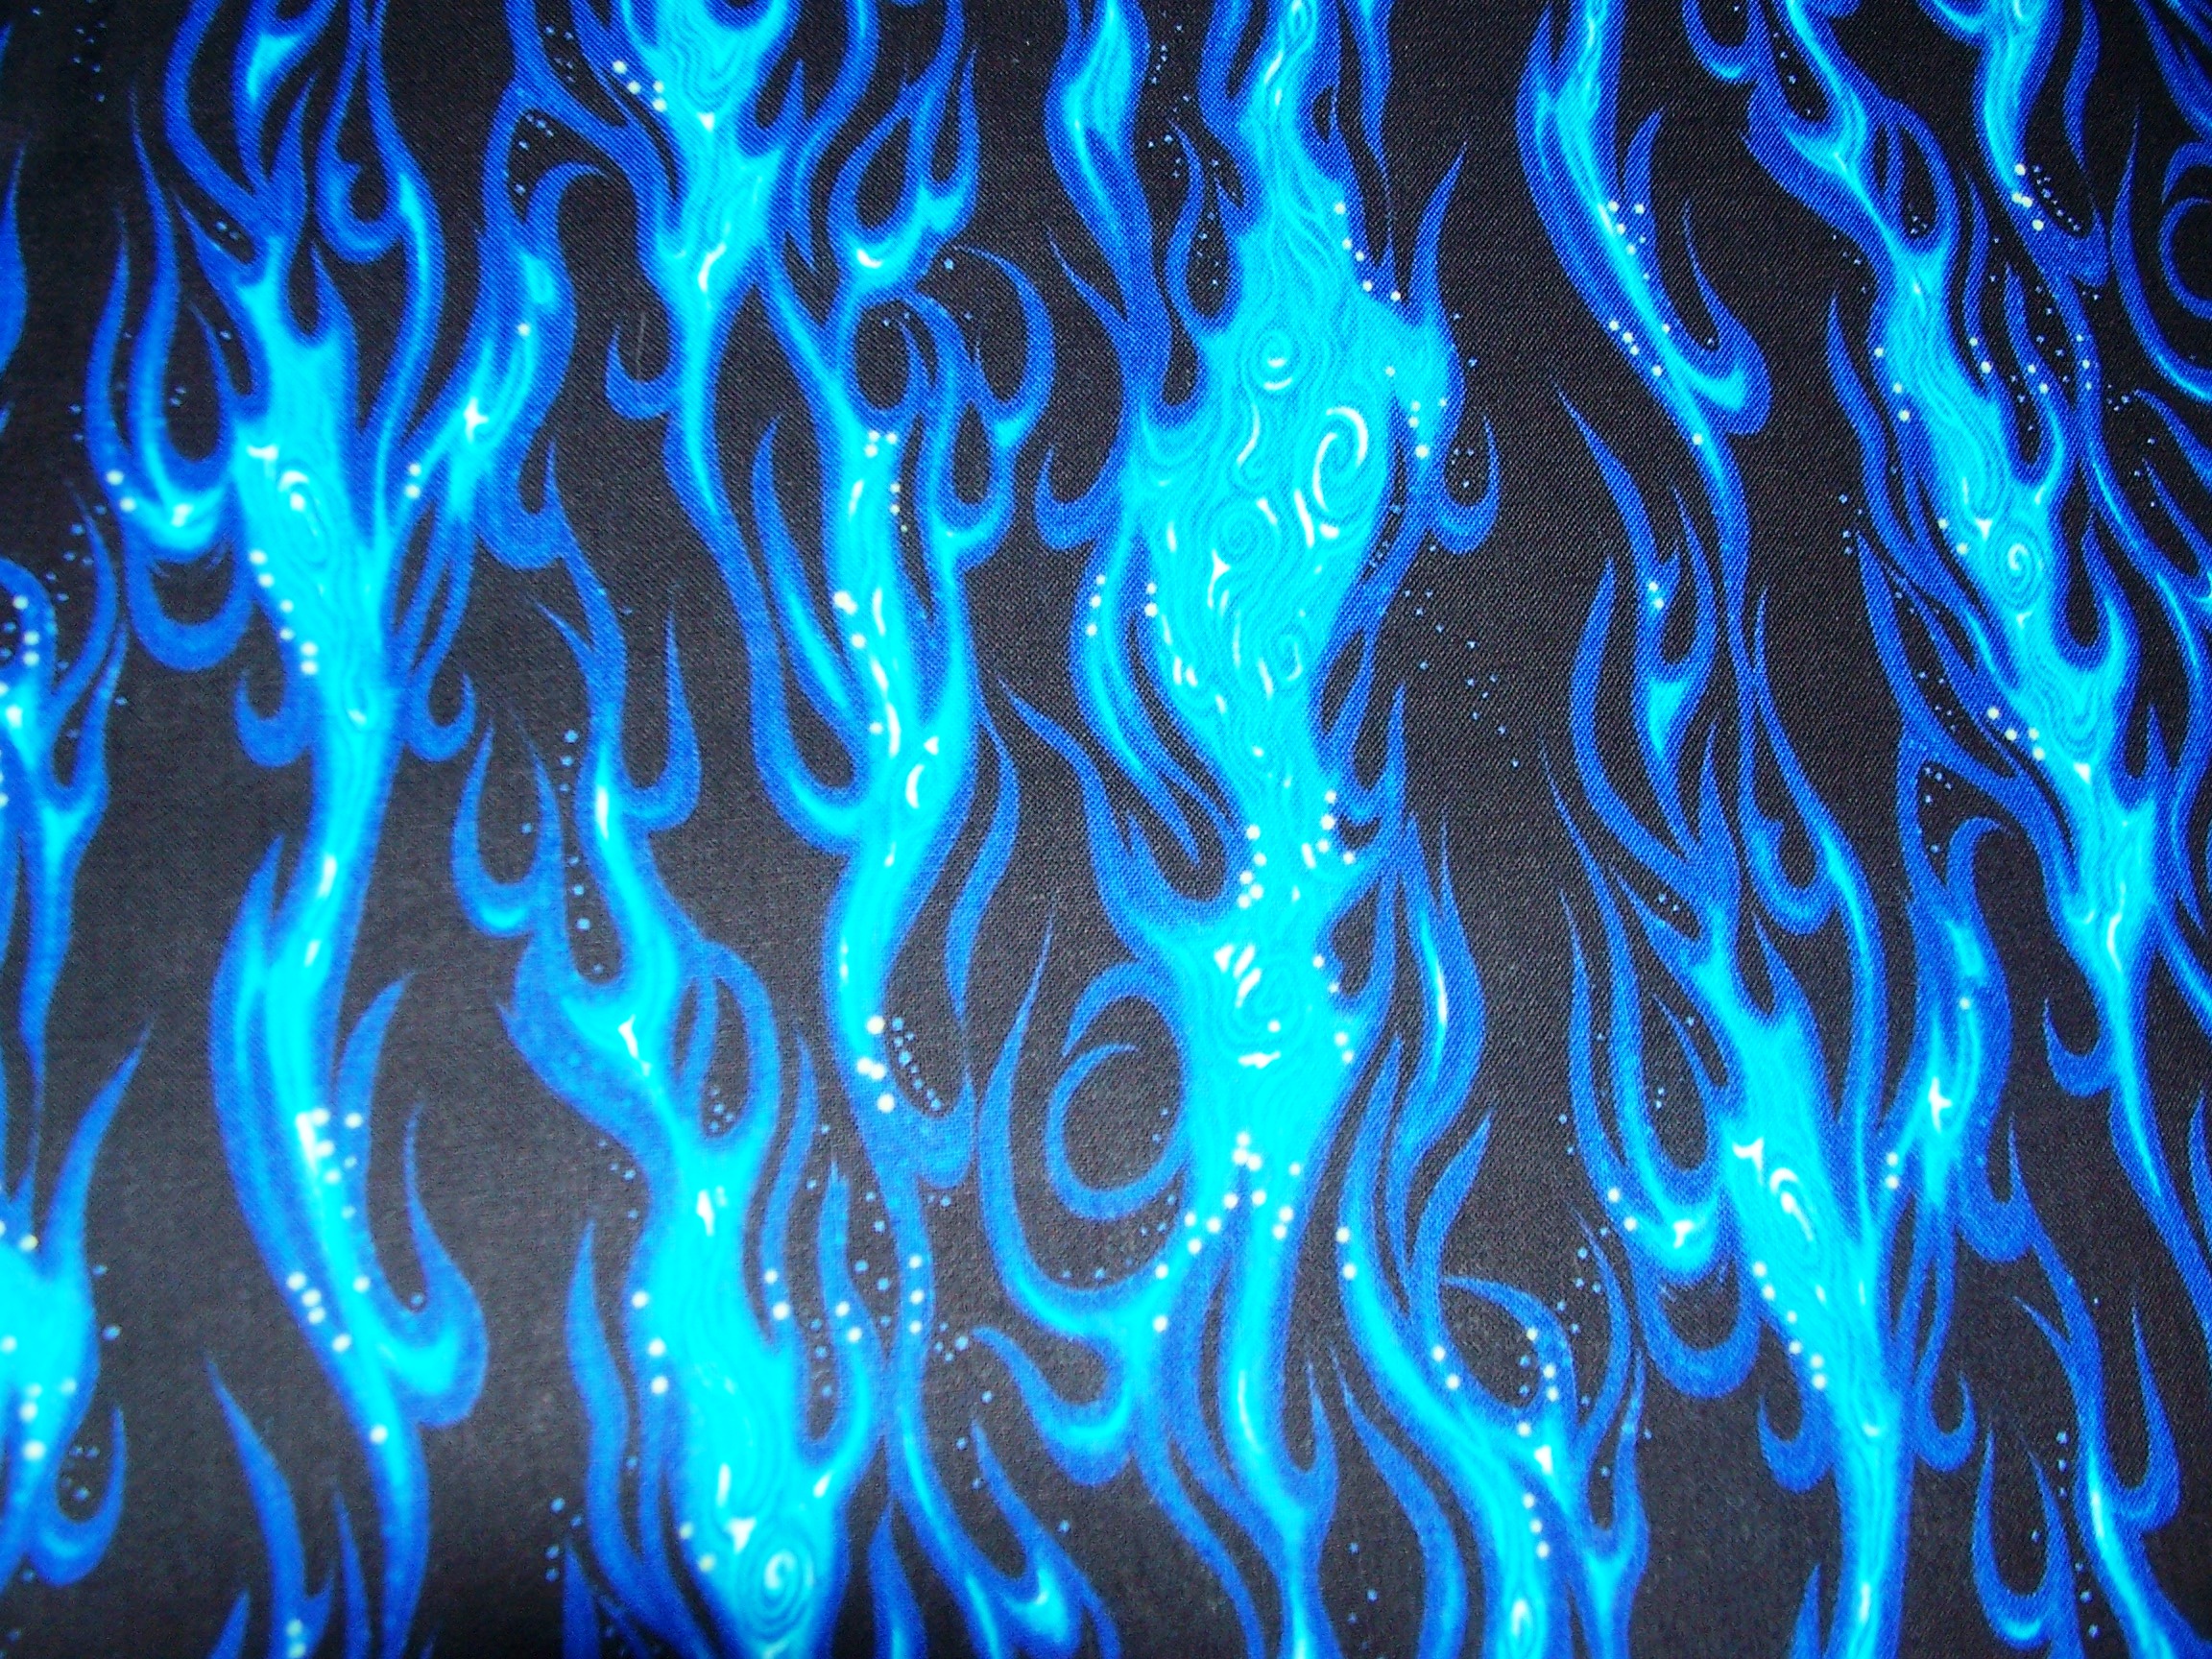 Blue Flames Backgrounds wallpaper Blue Flames Backgrounds hd 2304x1728